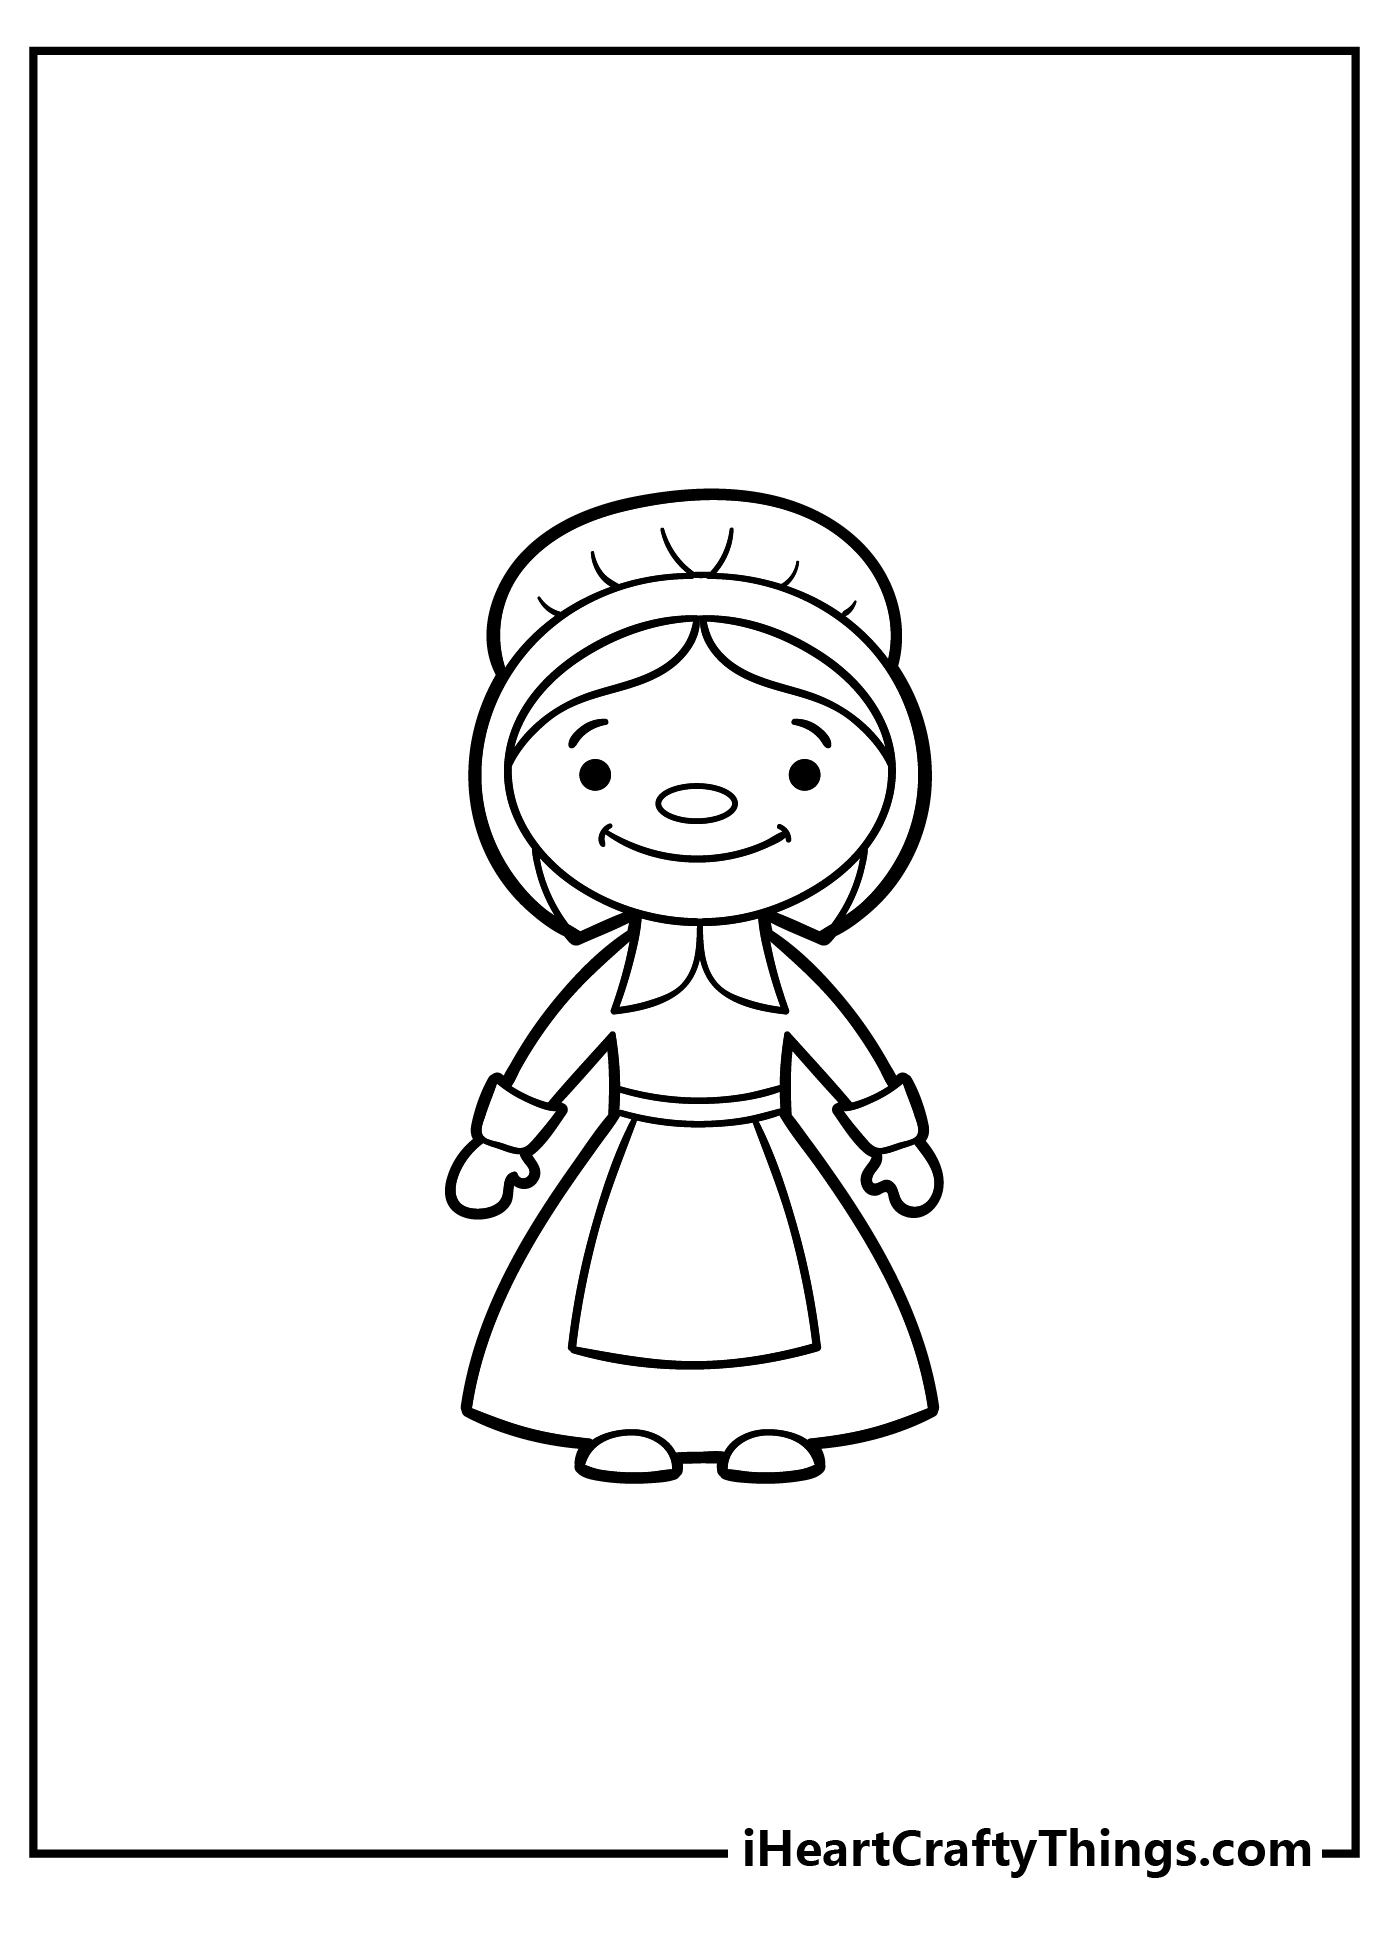 Pilgrim Coloring Original Sheet for children free download